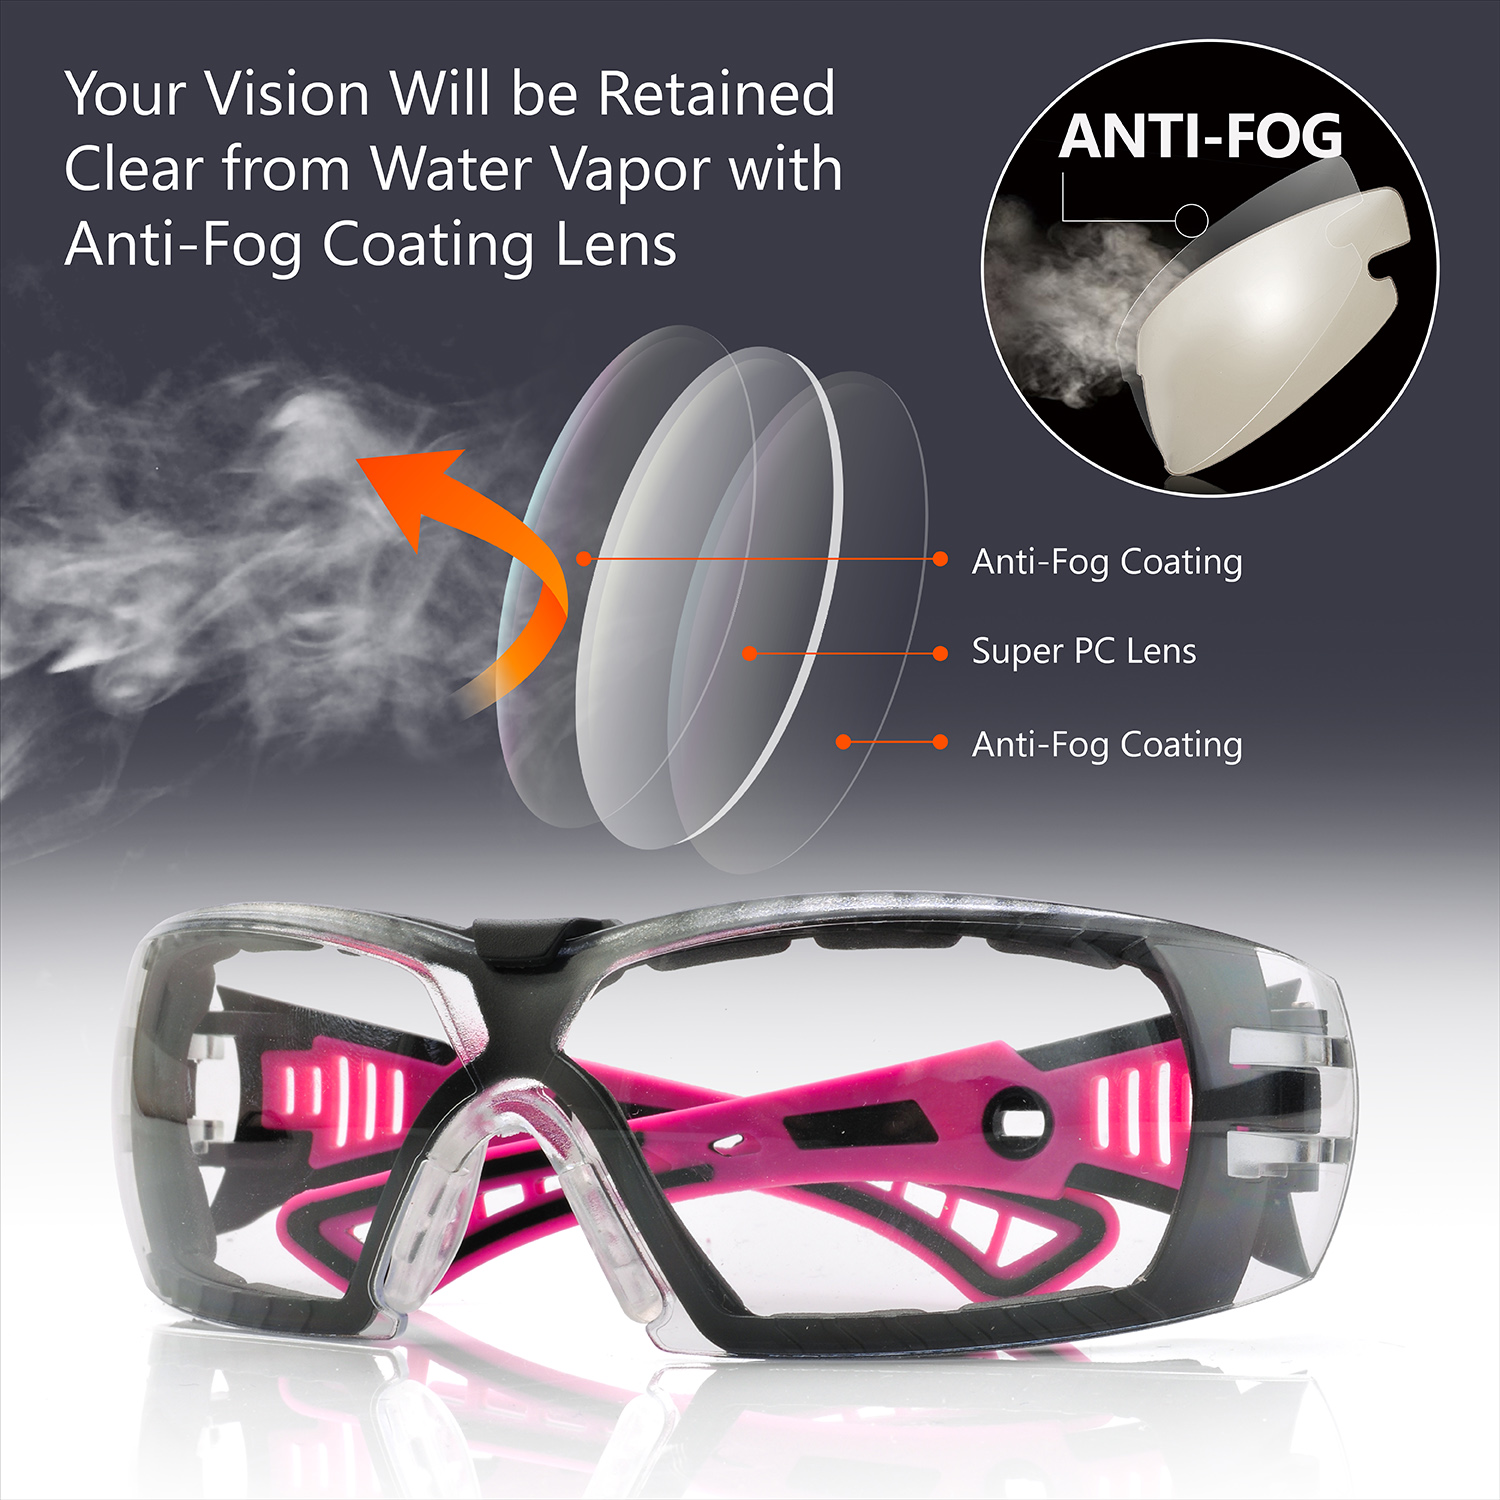 Lady Design Anti Fog Schutzbrille SG010